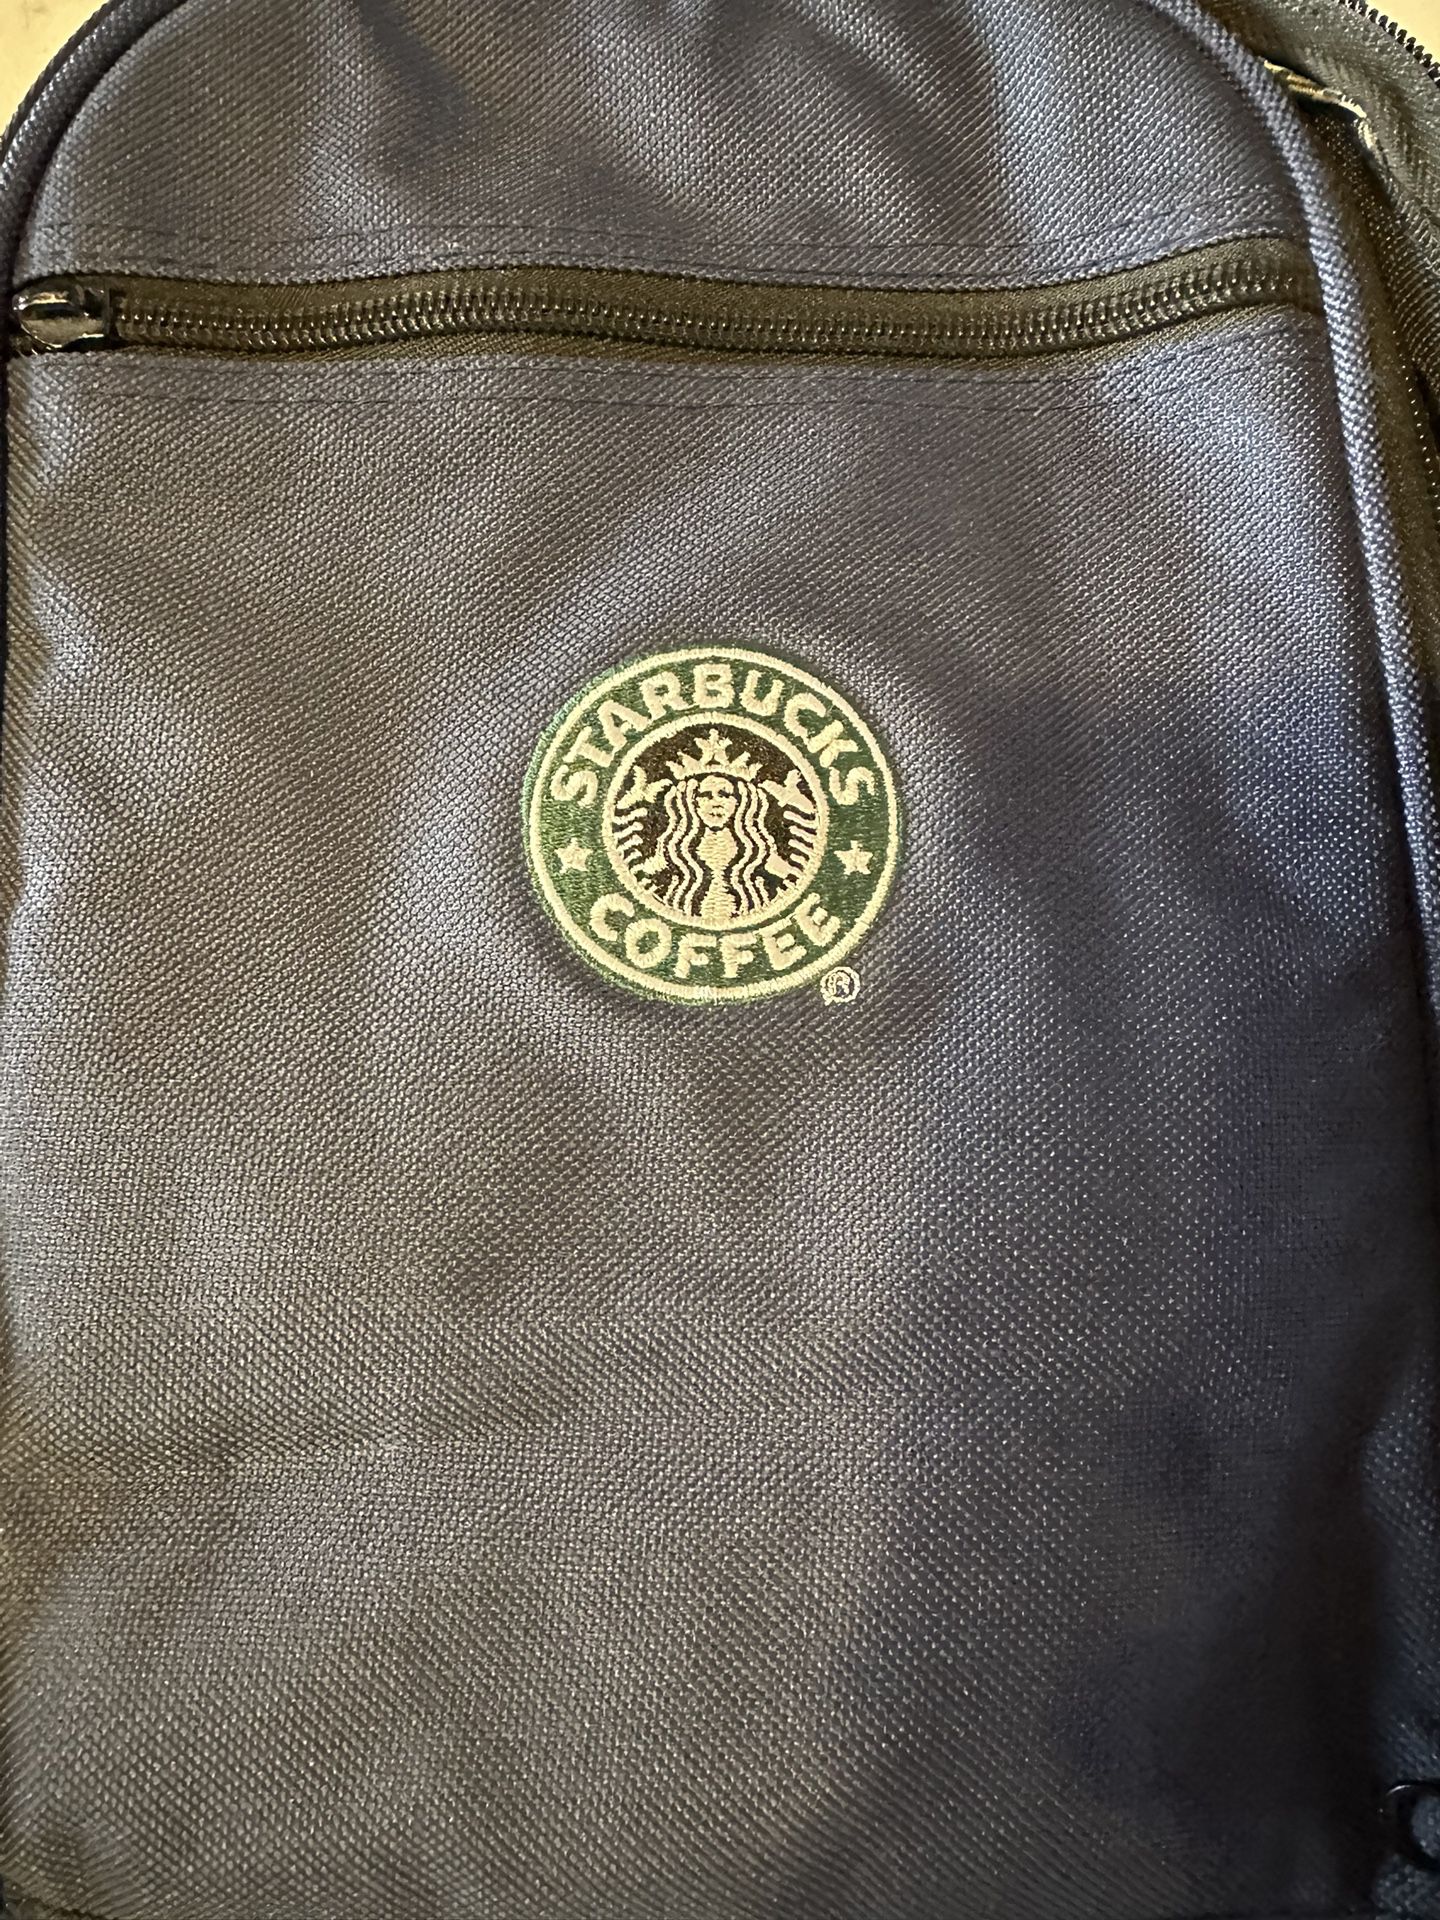 Starbucks Picnic Cooler Bag